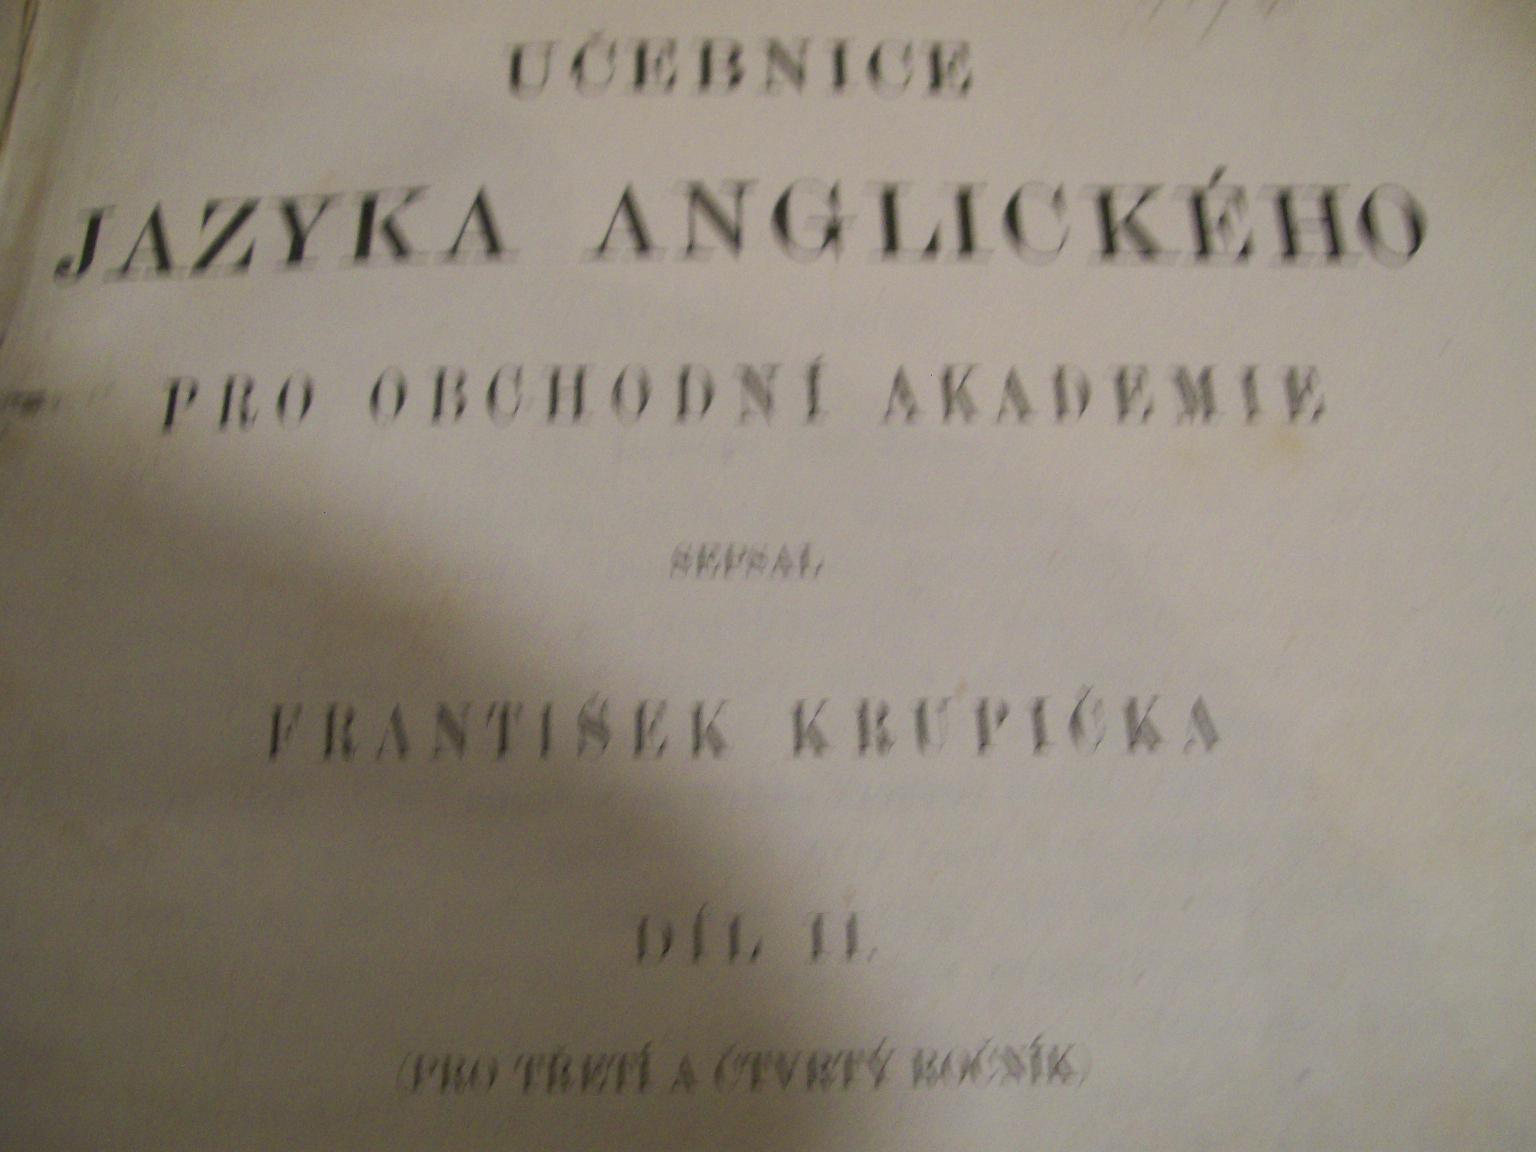 učebnice jazyka anglického 1920